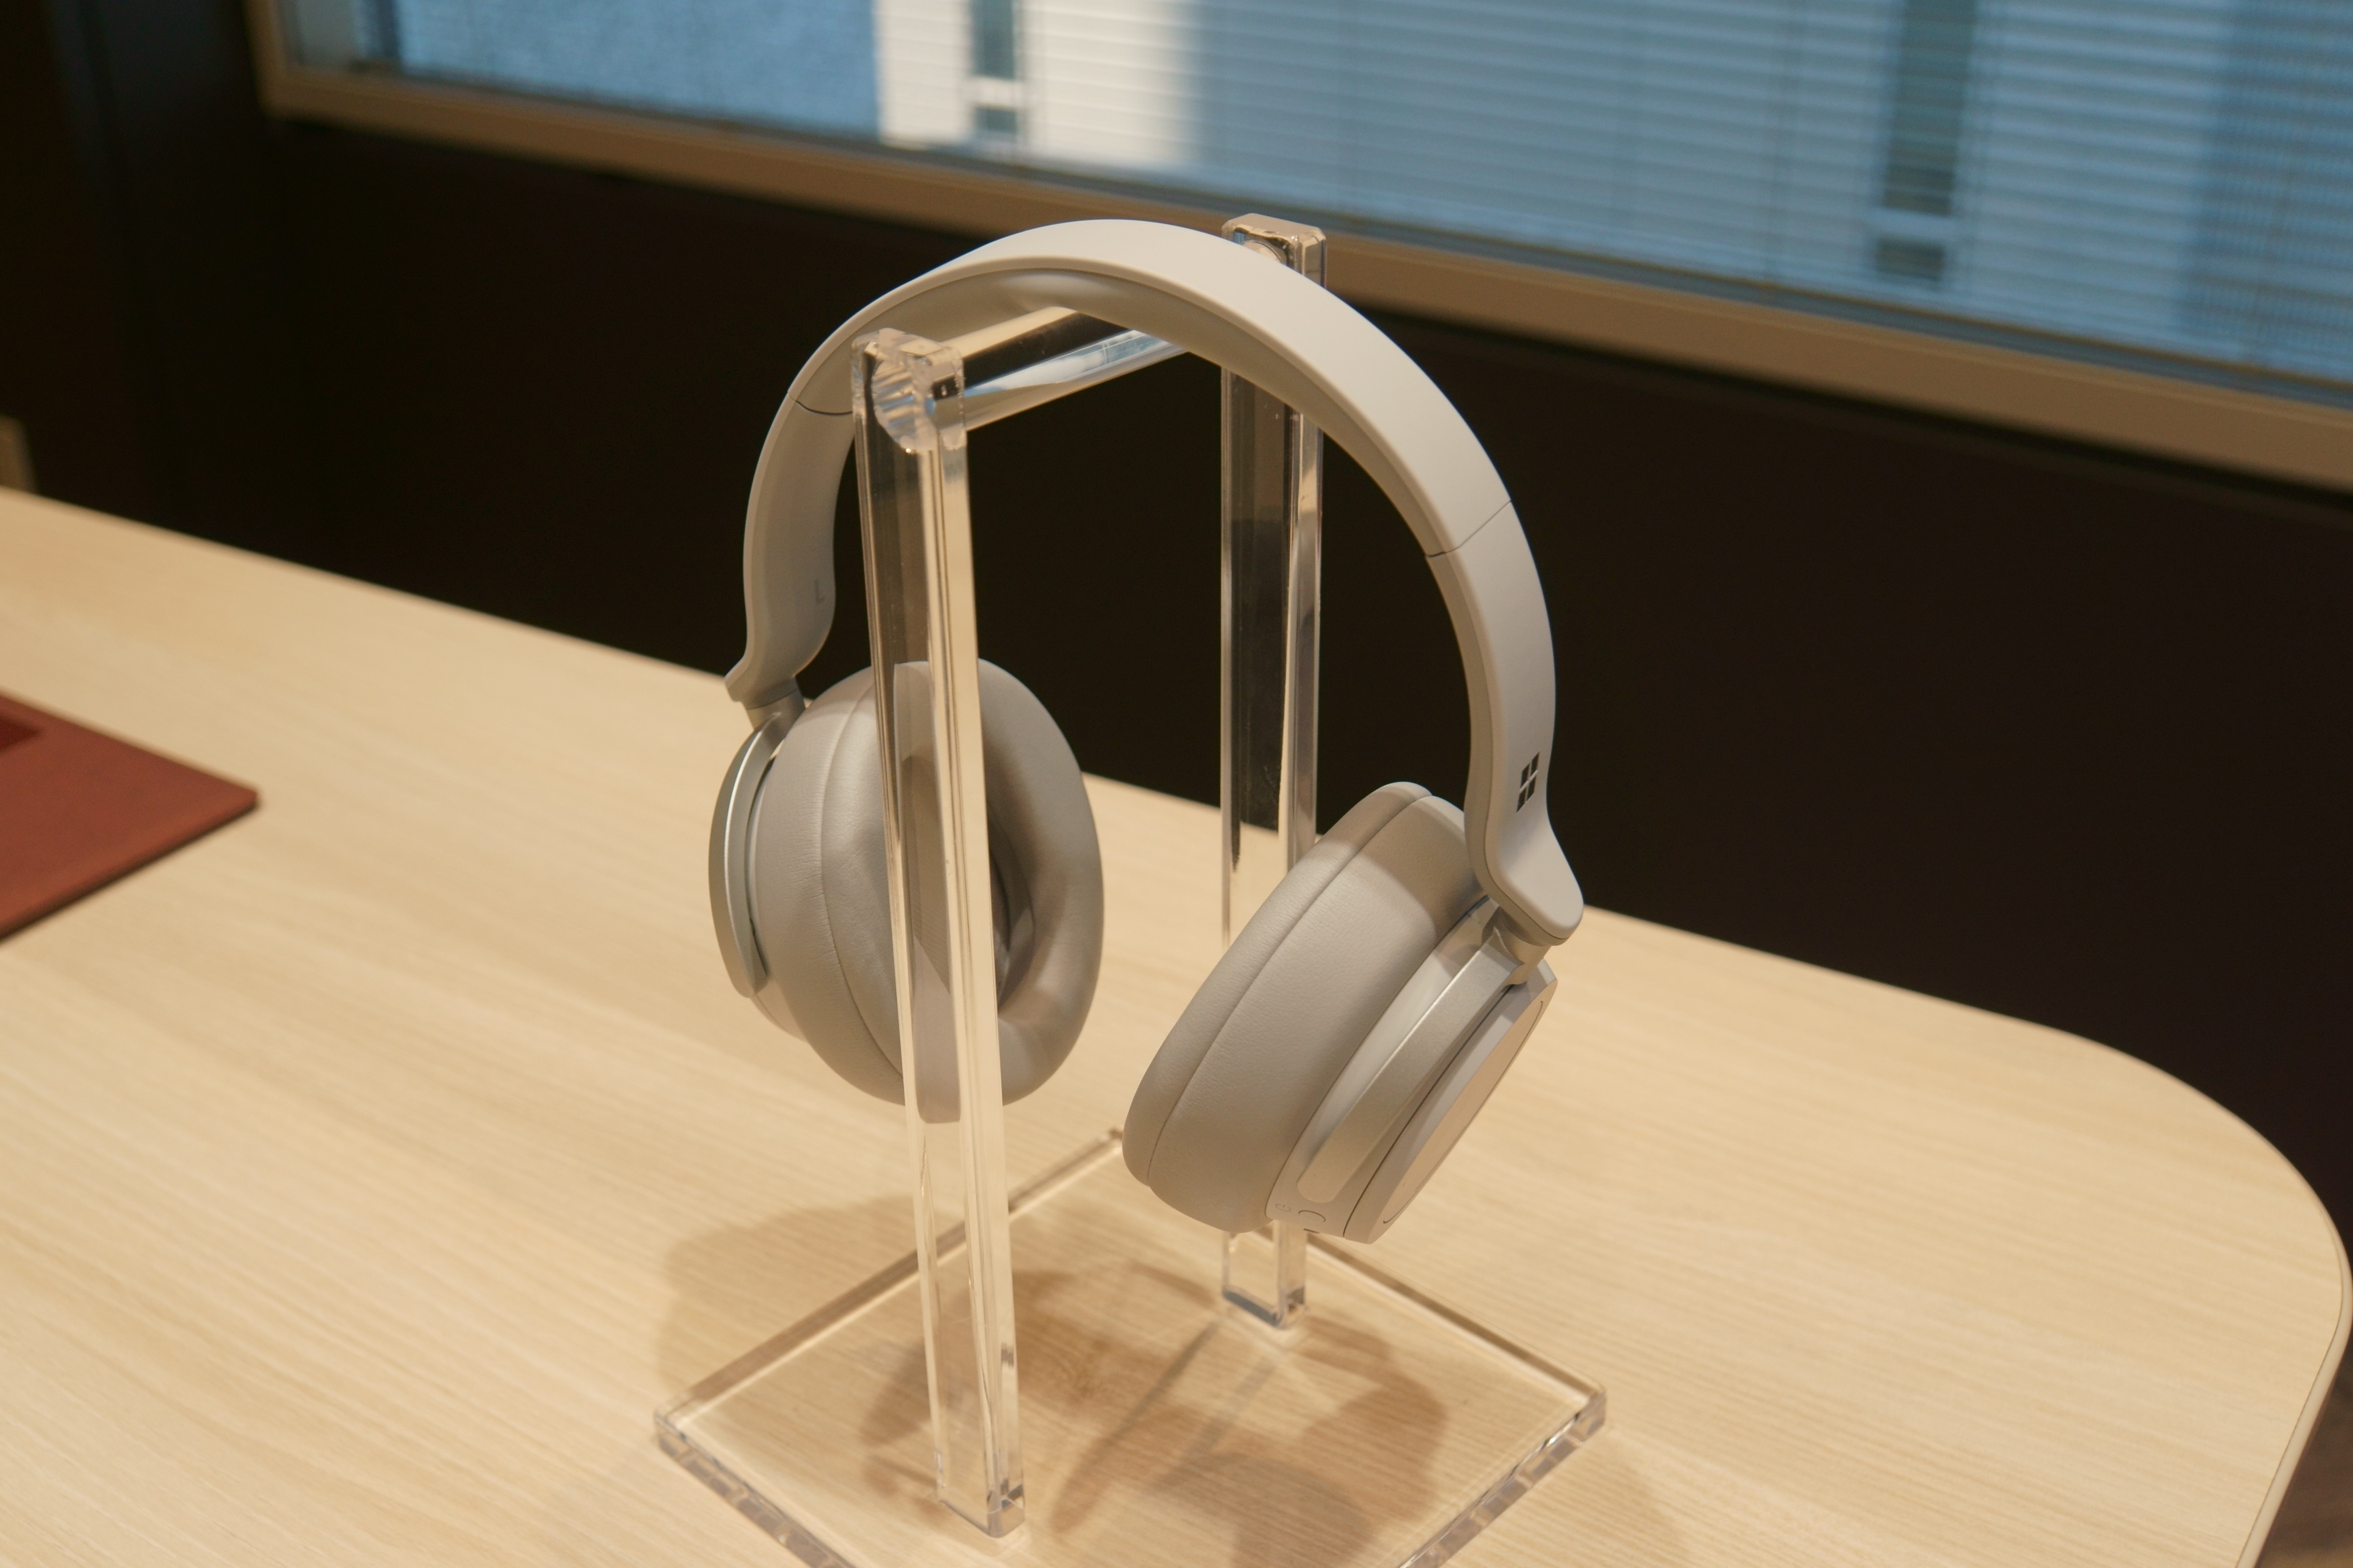 Surface Headphones
